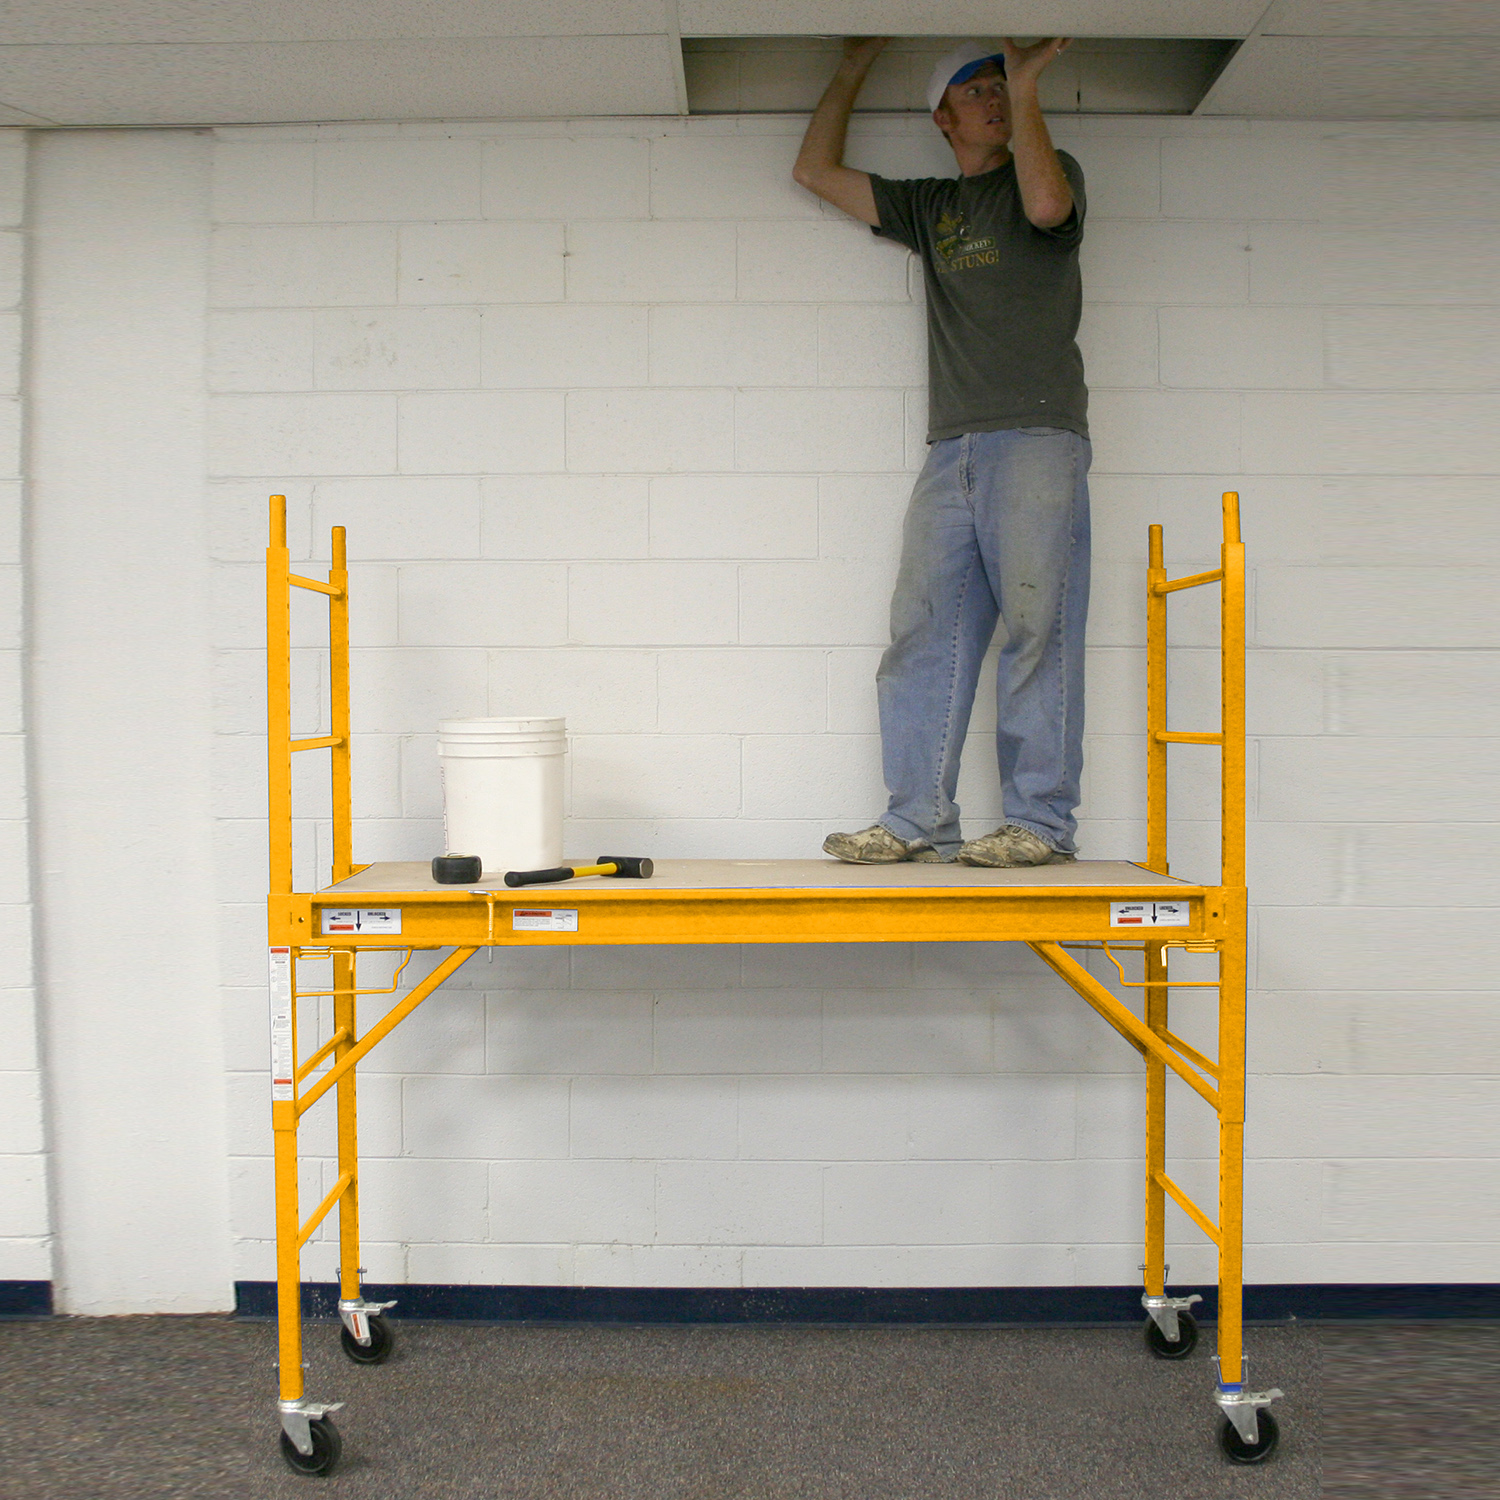 GSSI installing ceiling tiles